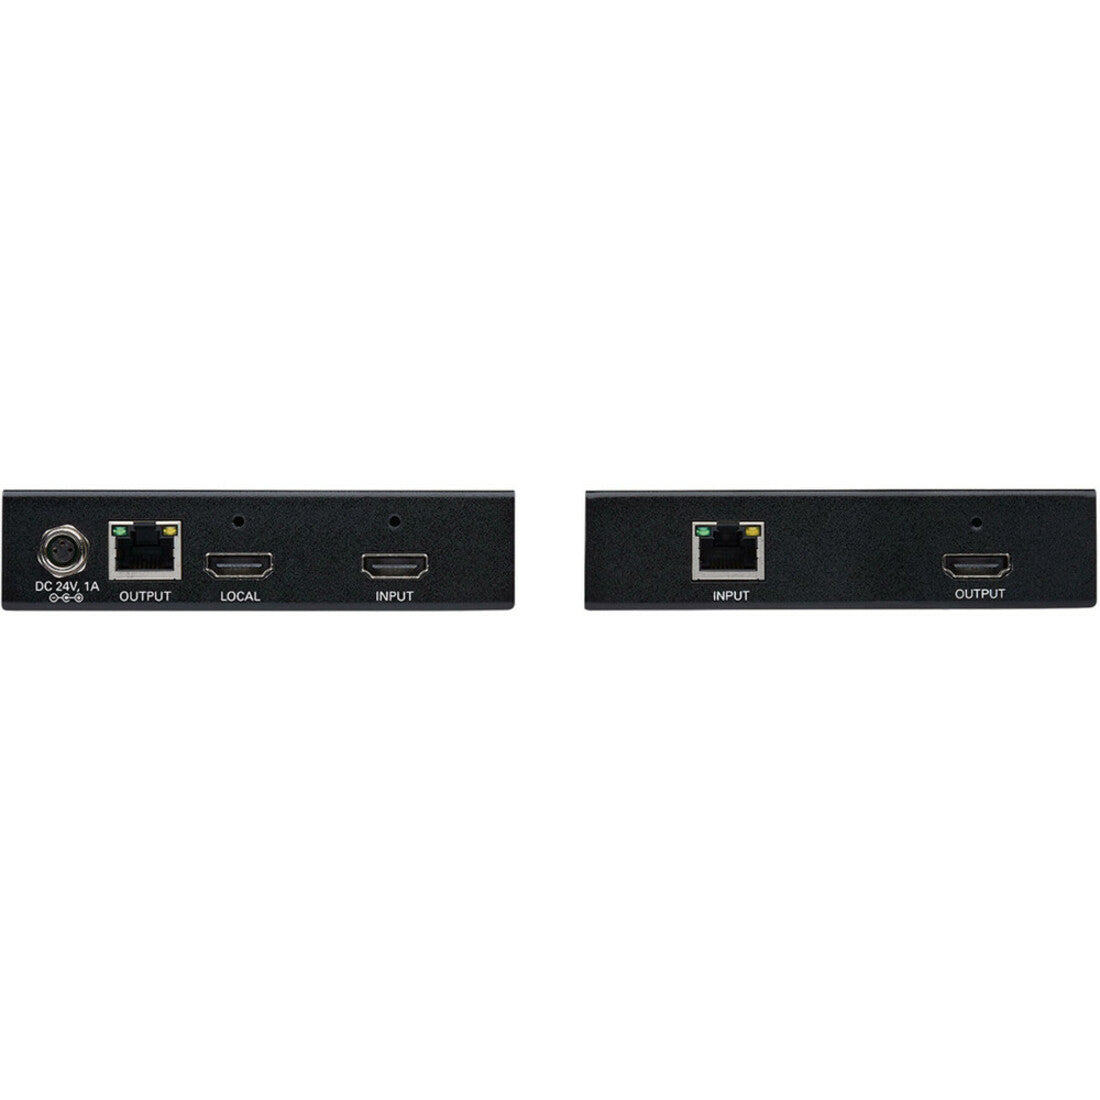 Tripp Lite HDMI Over Cat6 Extender Kit - 4K Video, 125 ft Range [Discontinued]